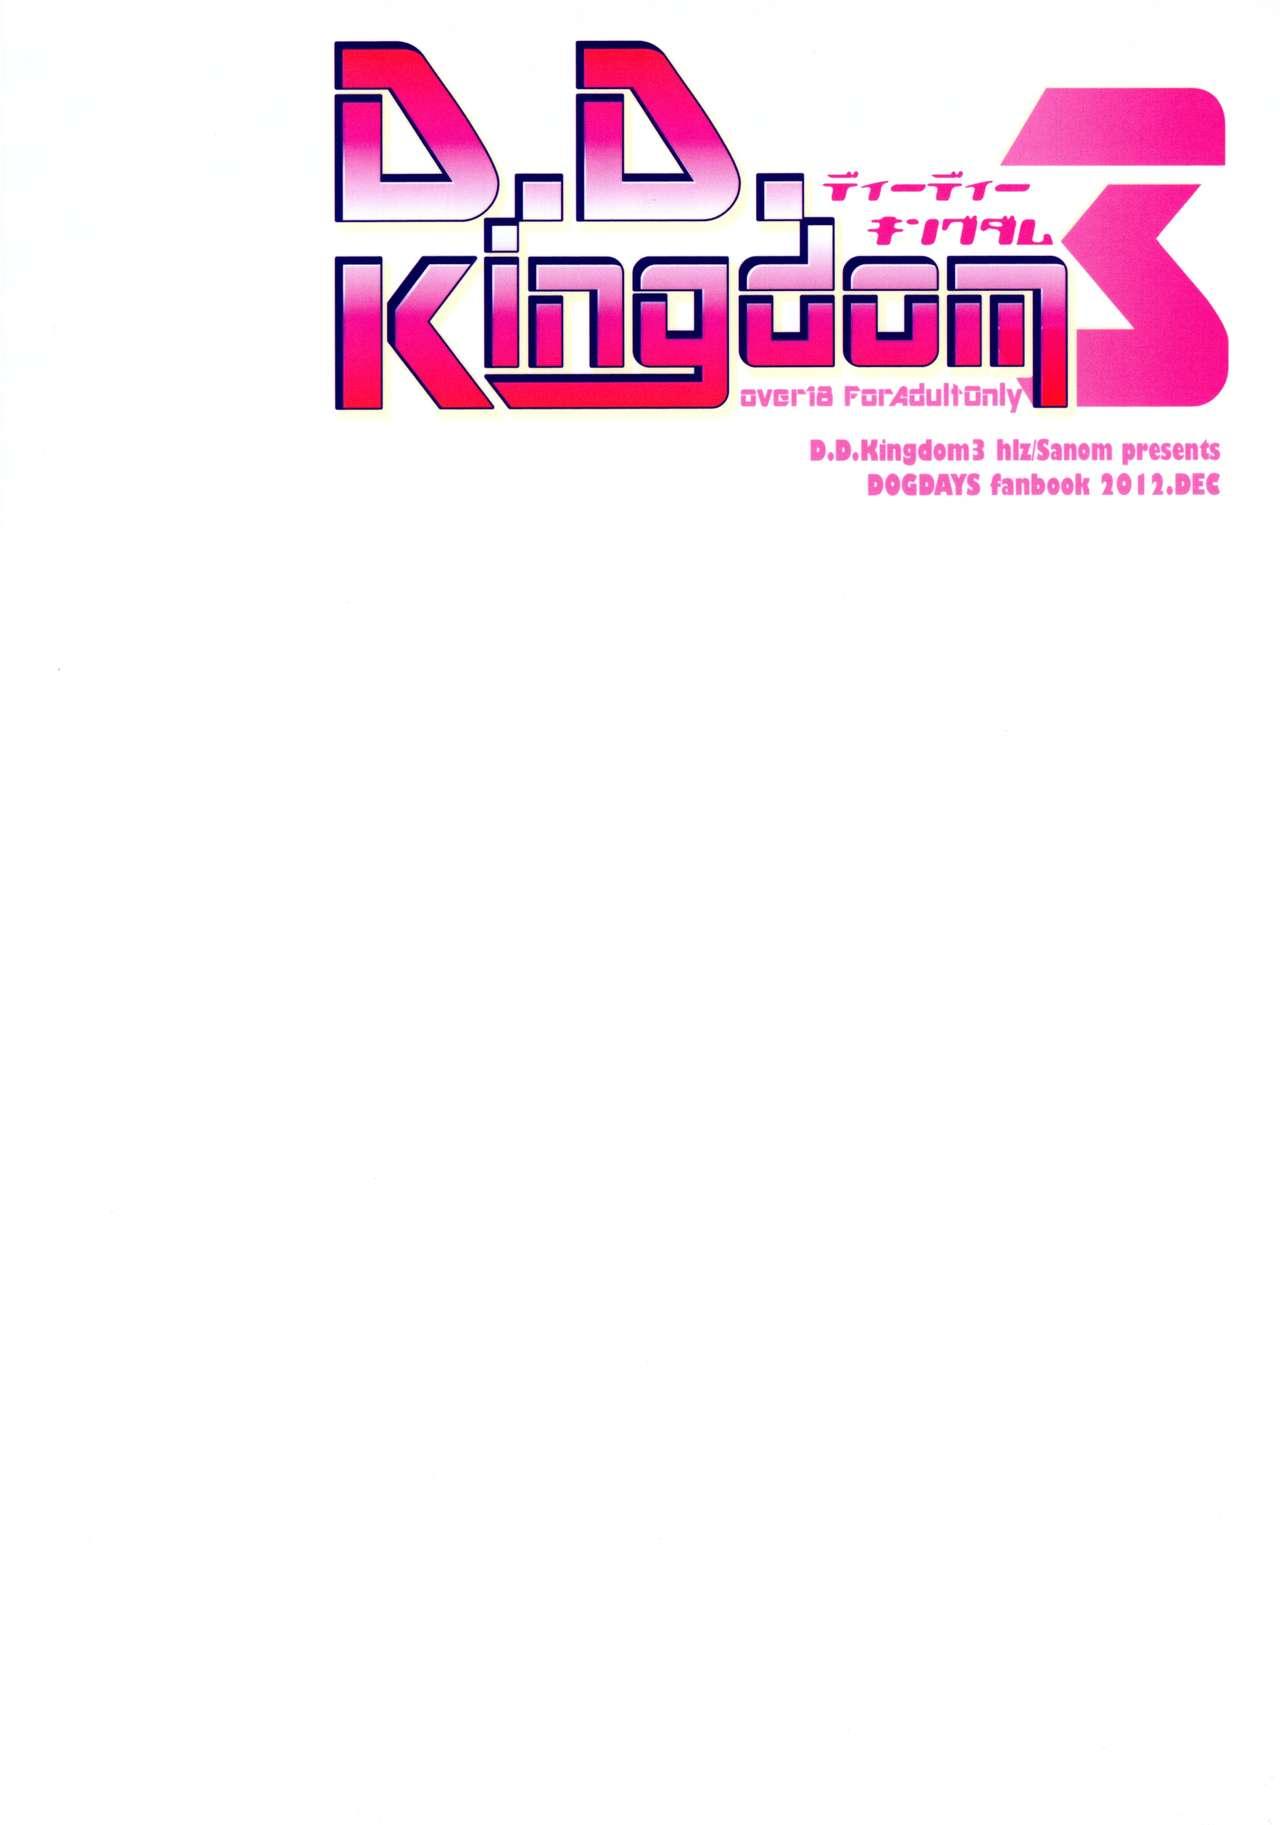 Banheiro D.D.Kingdom3 - Dog days Bubble - Page 2